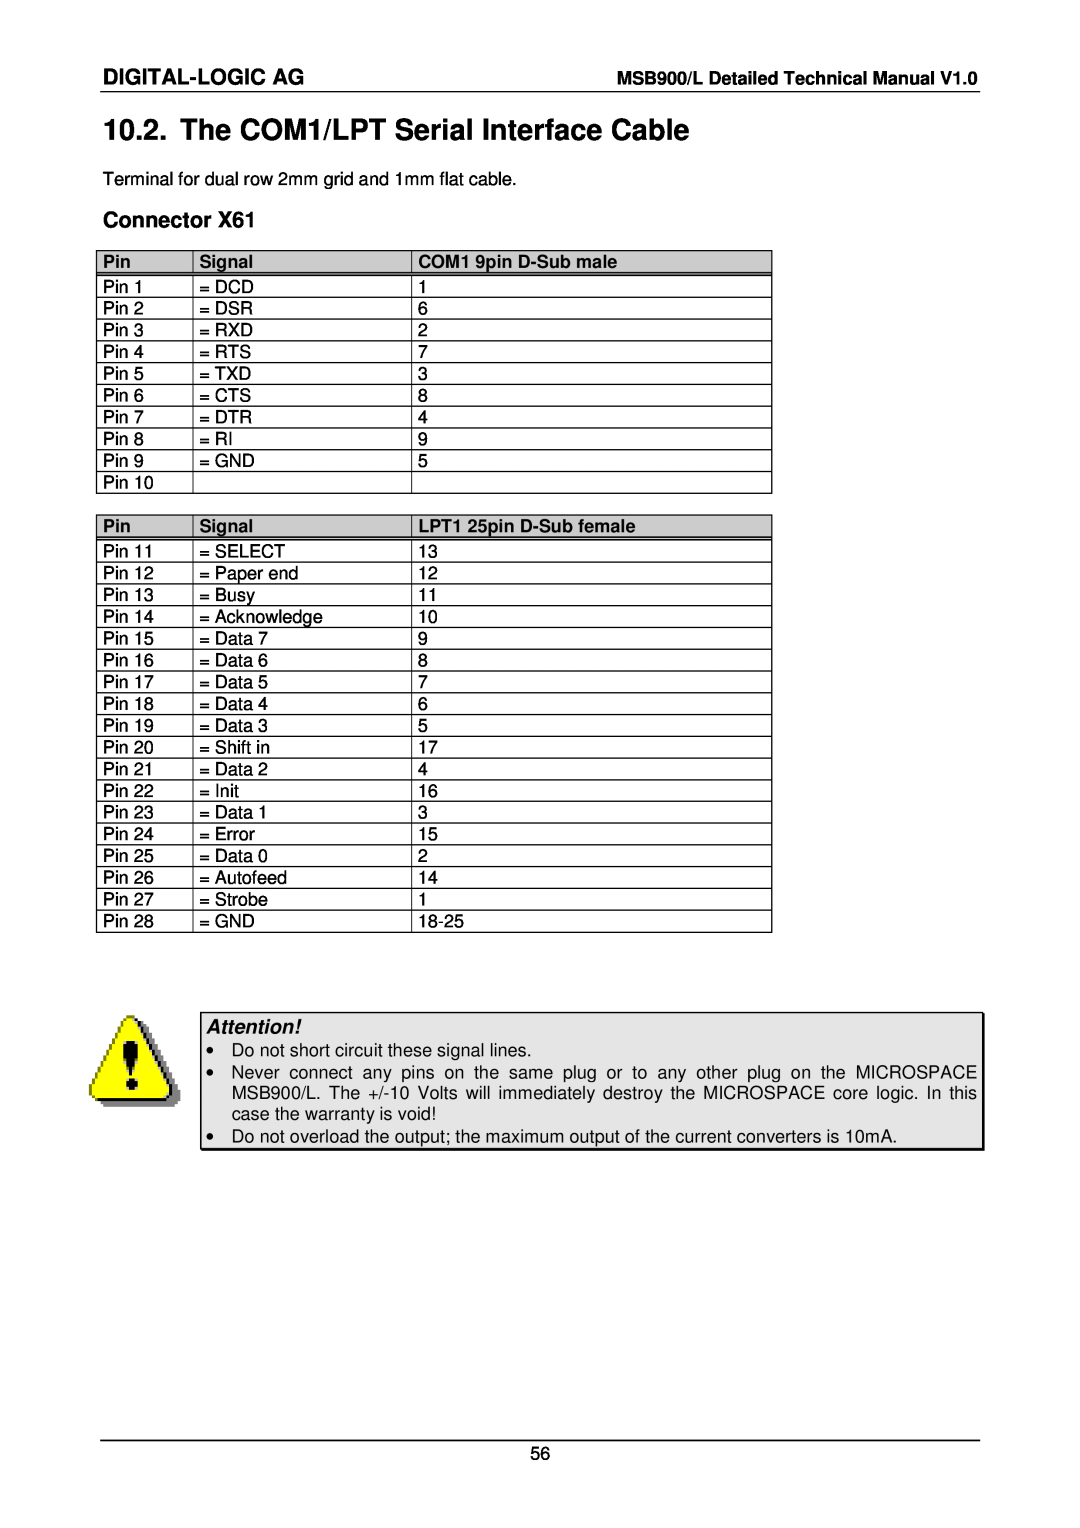 Compaq MSB900L user manual The COM1/LPT Serial Interface Cable, Connector, Digital-Logic Ag 